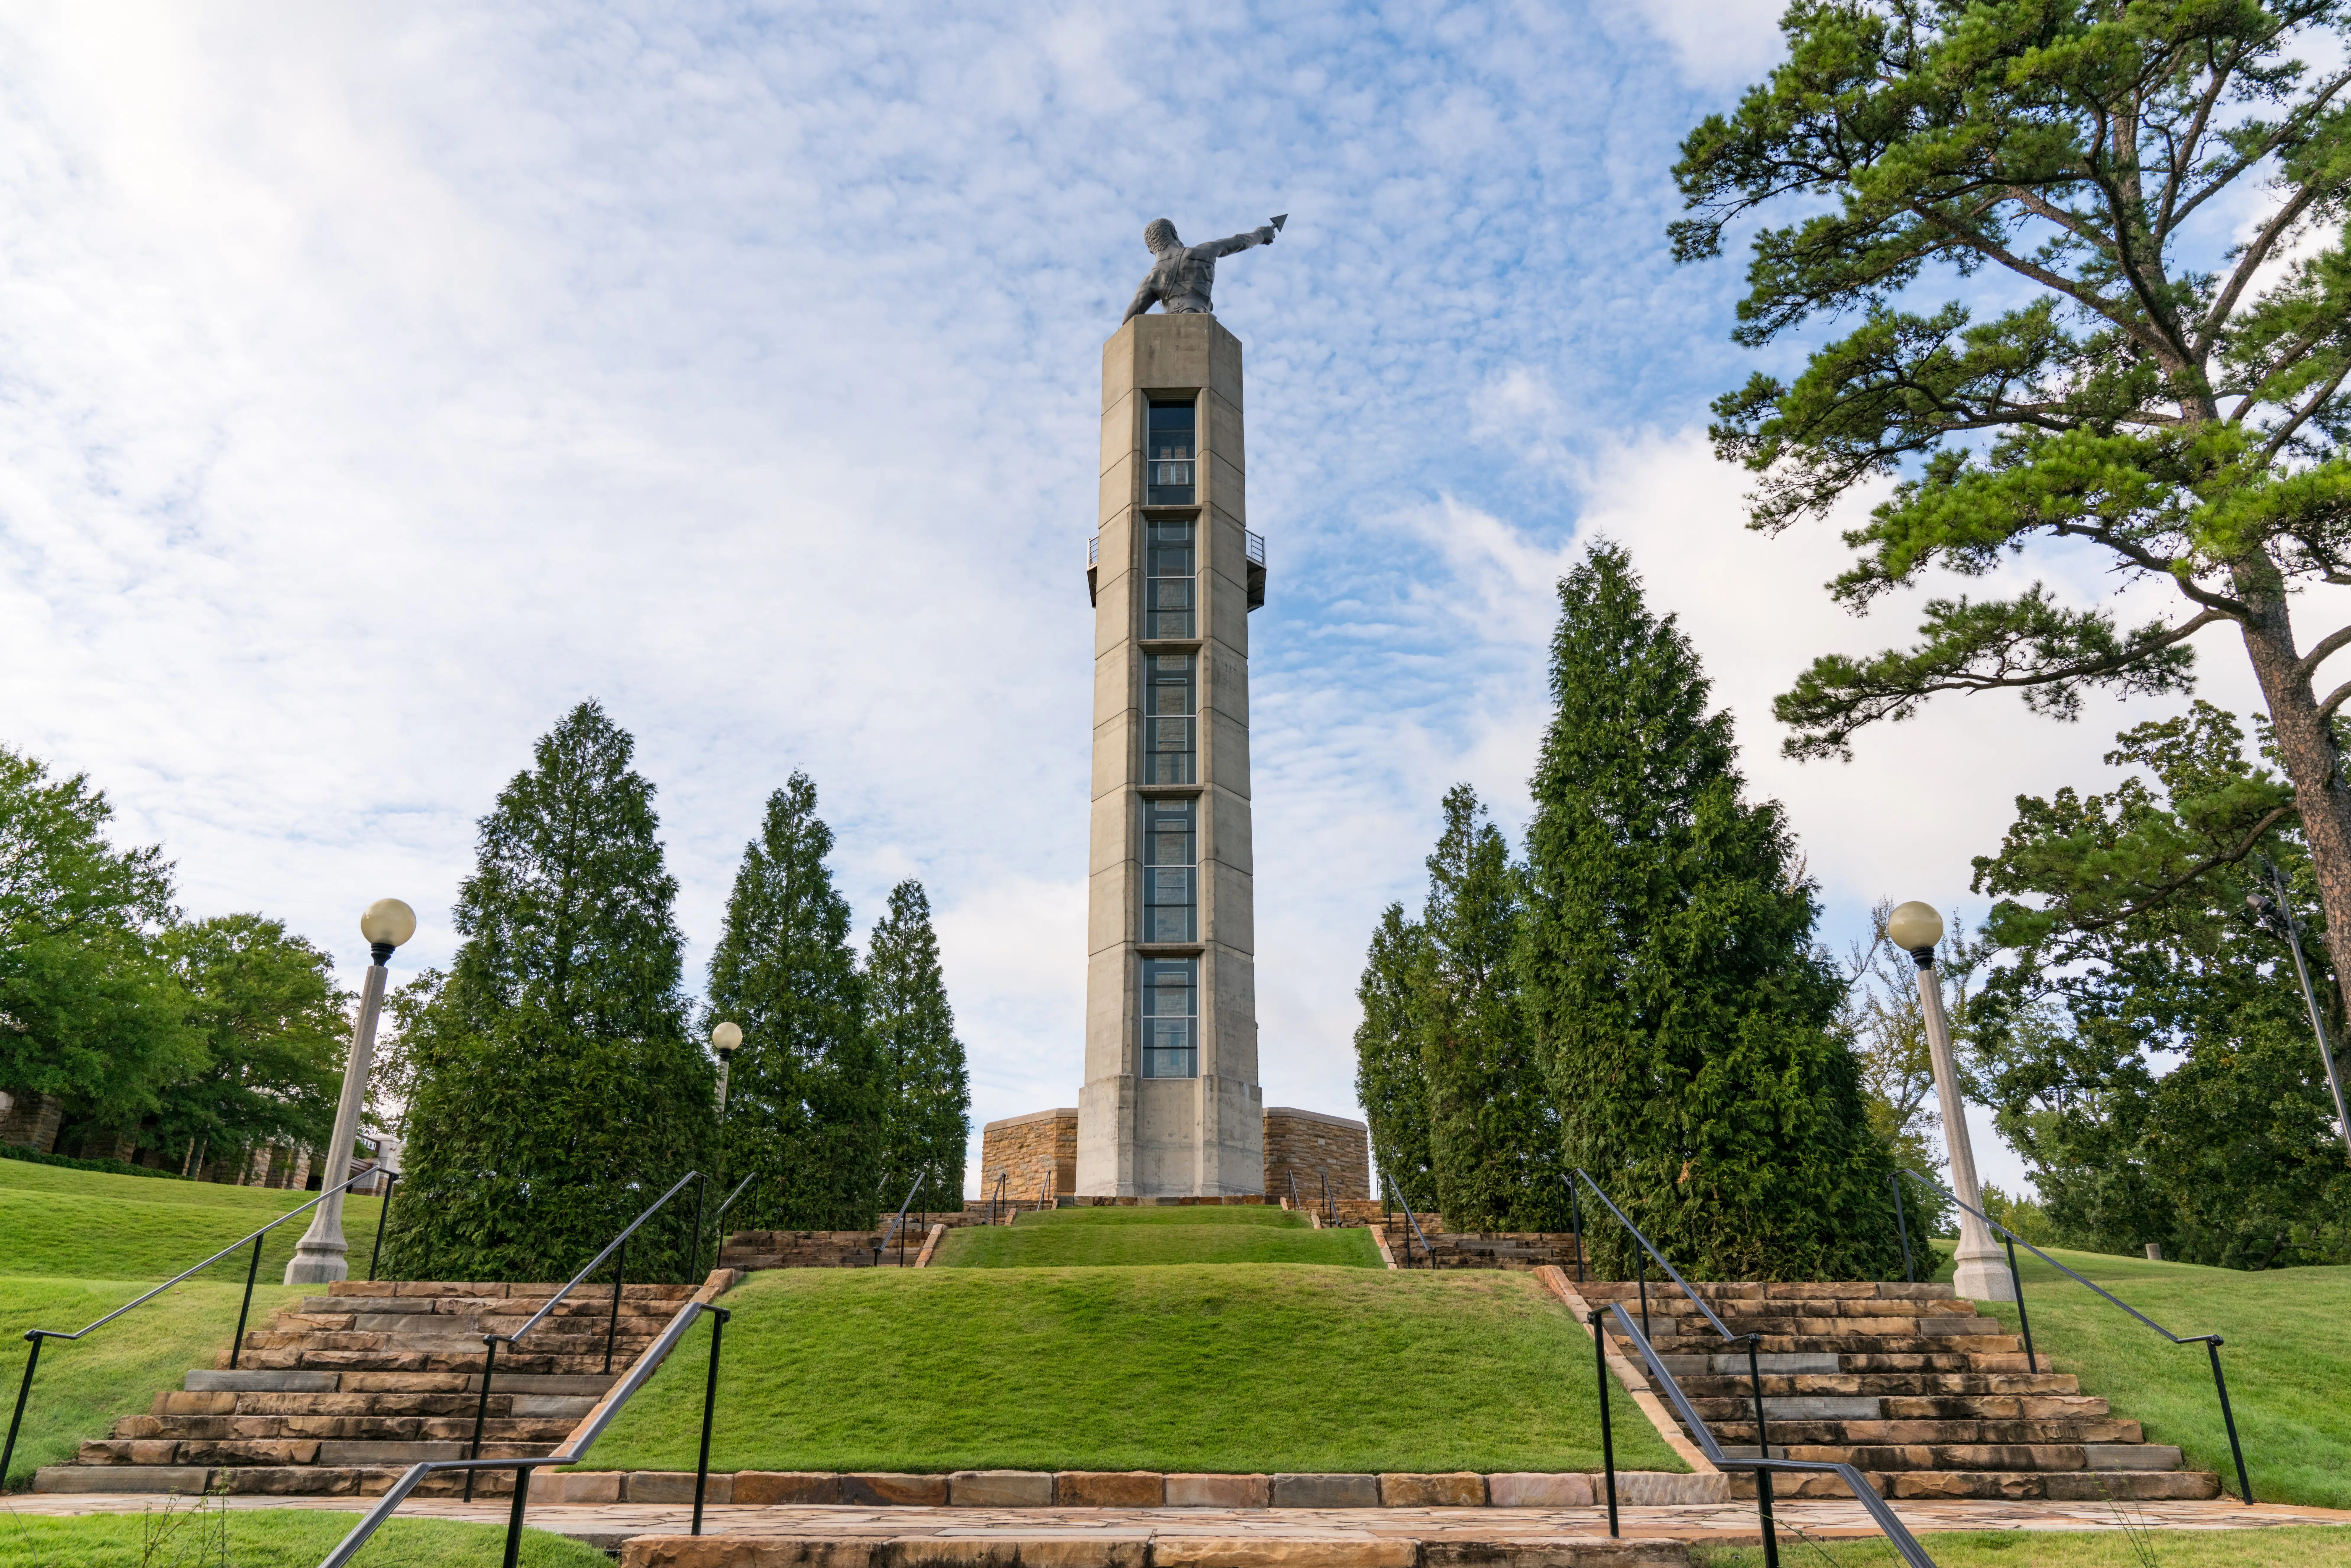 Birmingham, AL - October 7, 2019: Observation Tower in Vulcan Park in Birmingham, Alabama